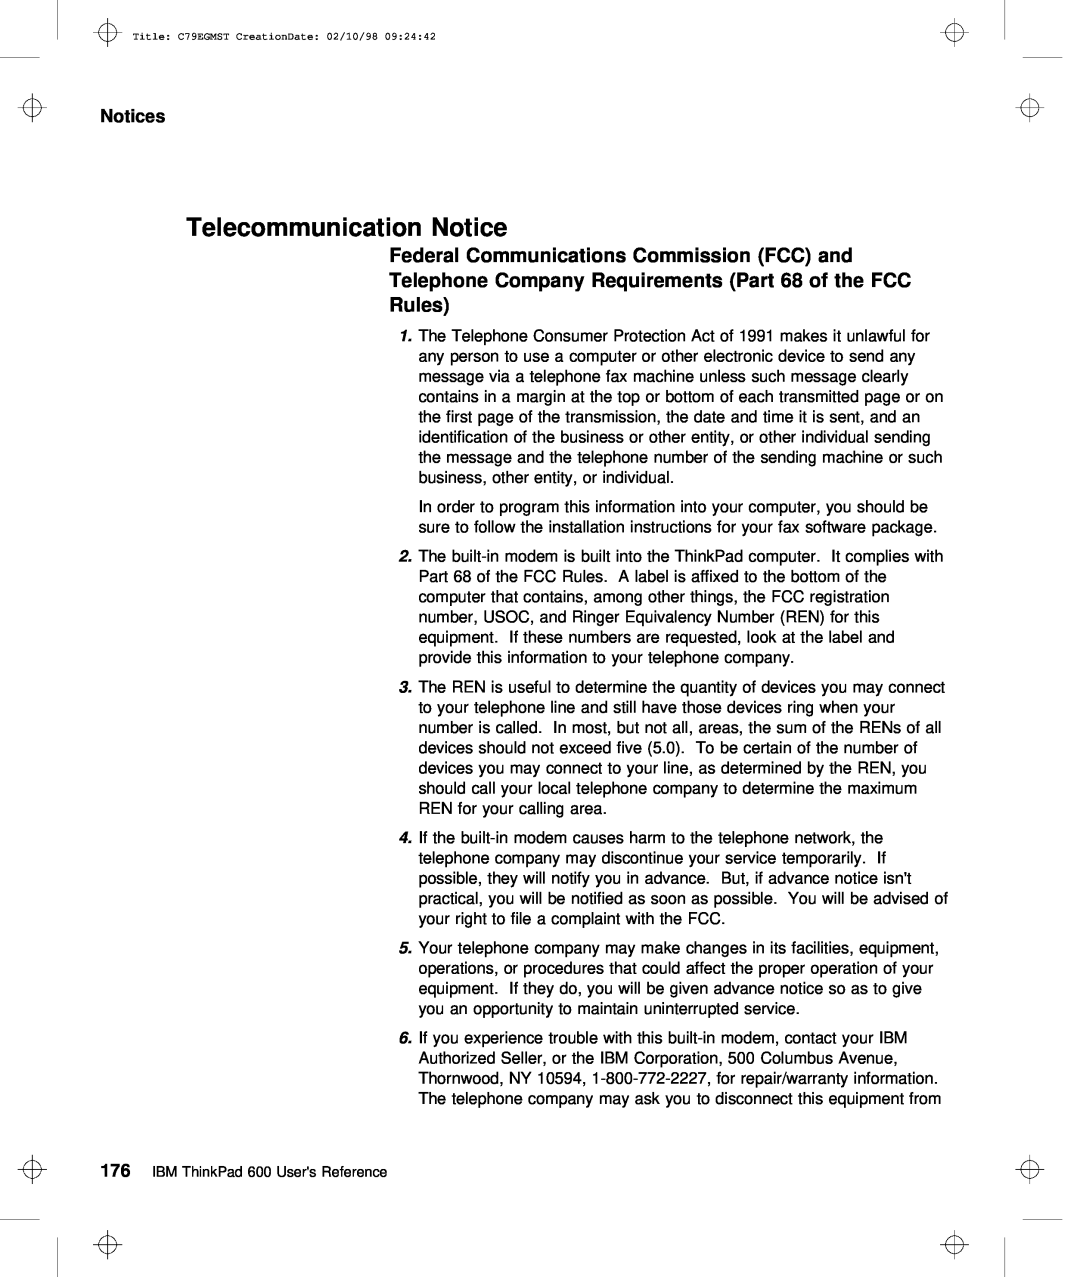 IBM C79EGMST manual Telecommunication Notice, Part, Rules, Notices, The 